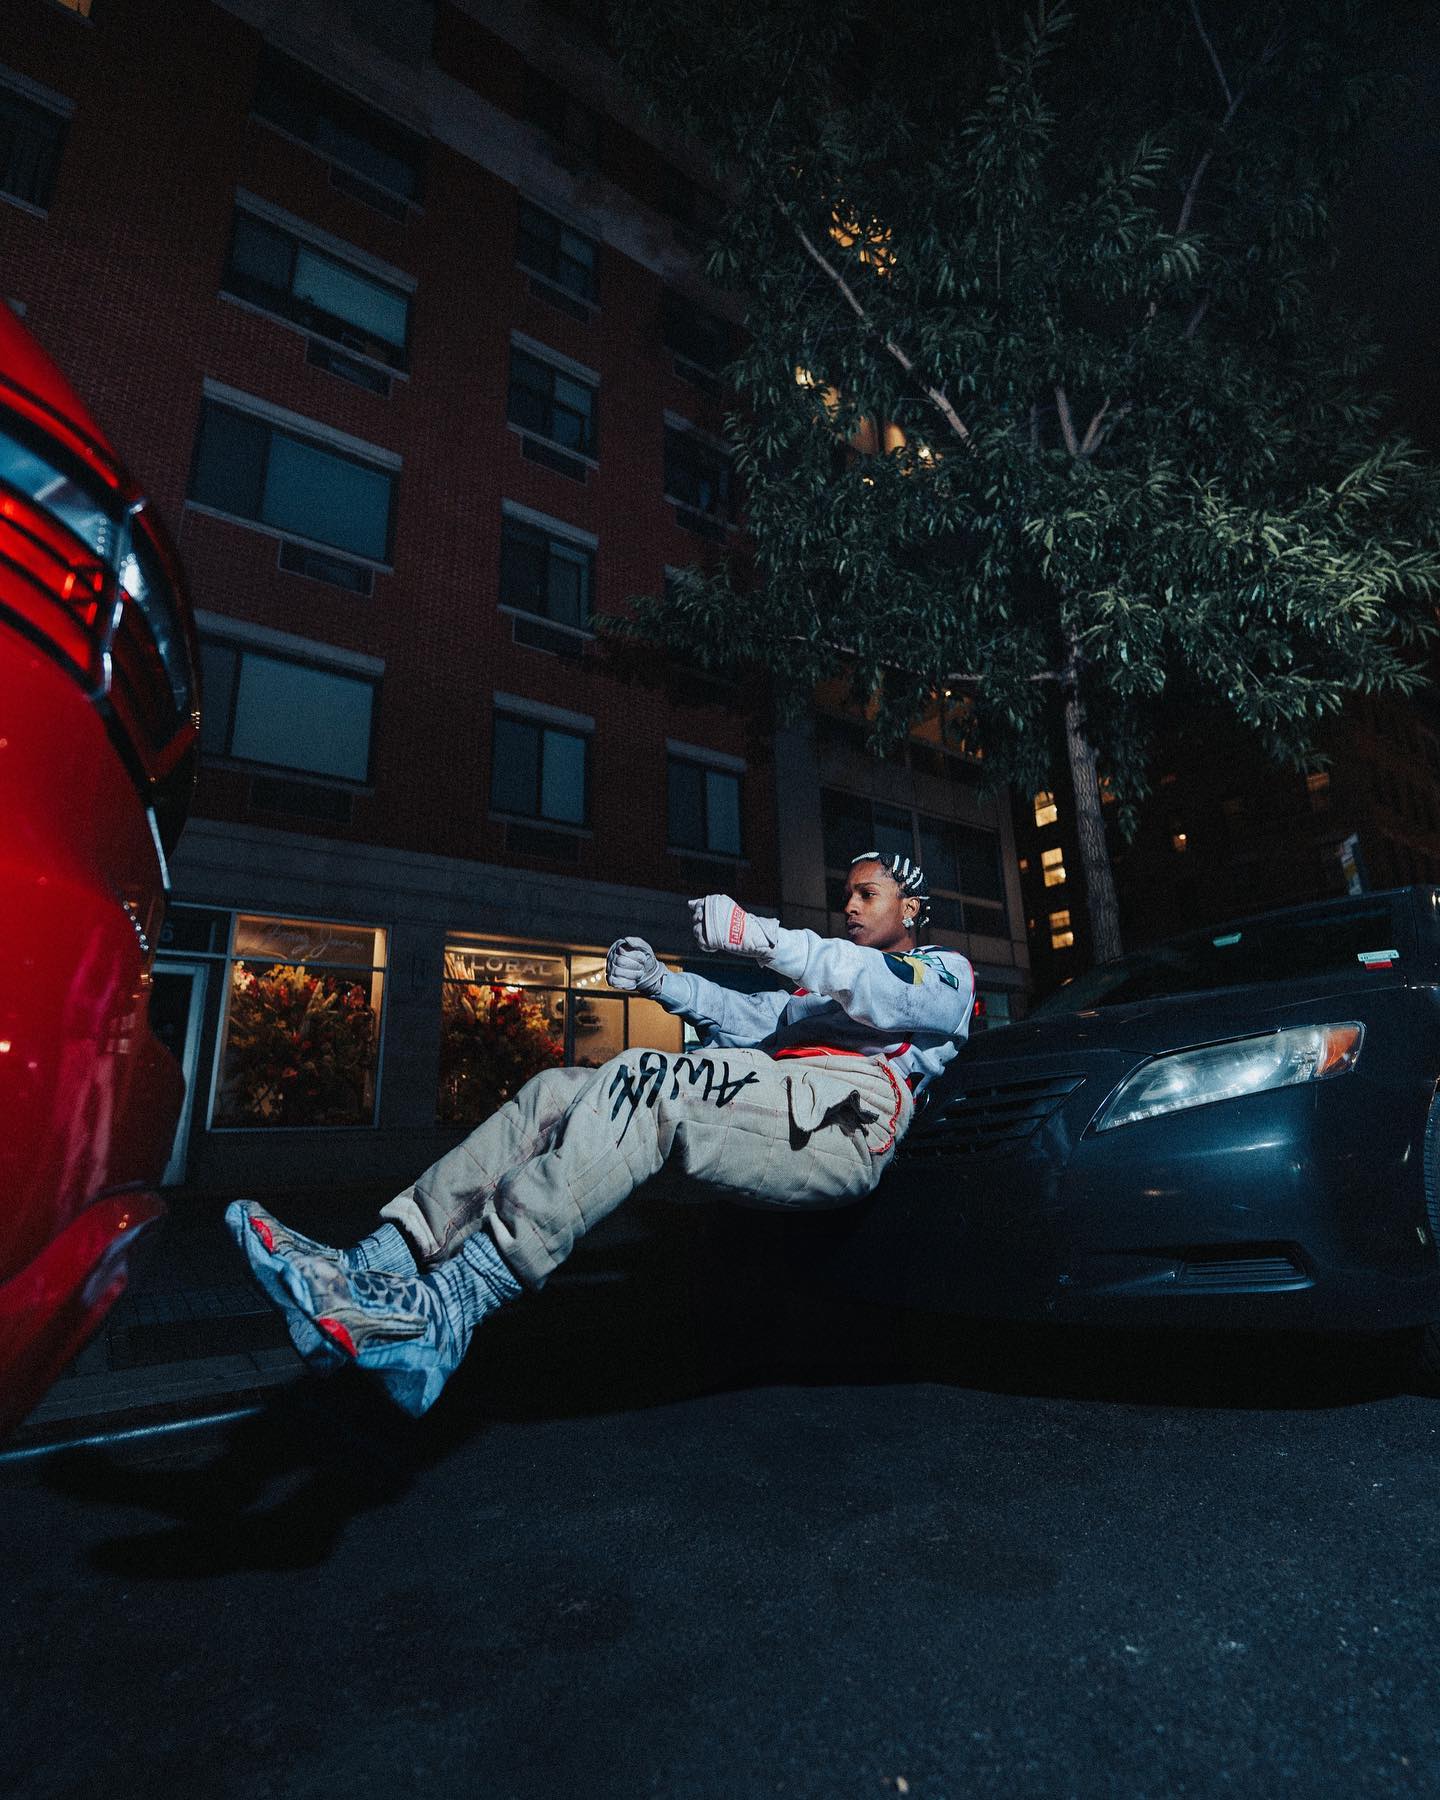 A$AP Rocky wears his PUMA F1 collab clothing